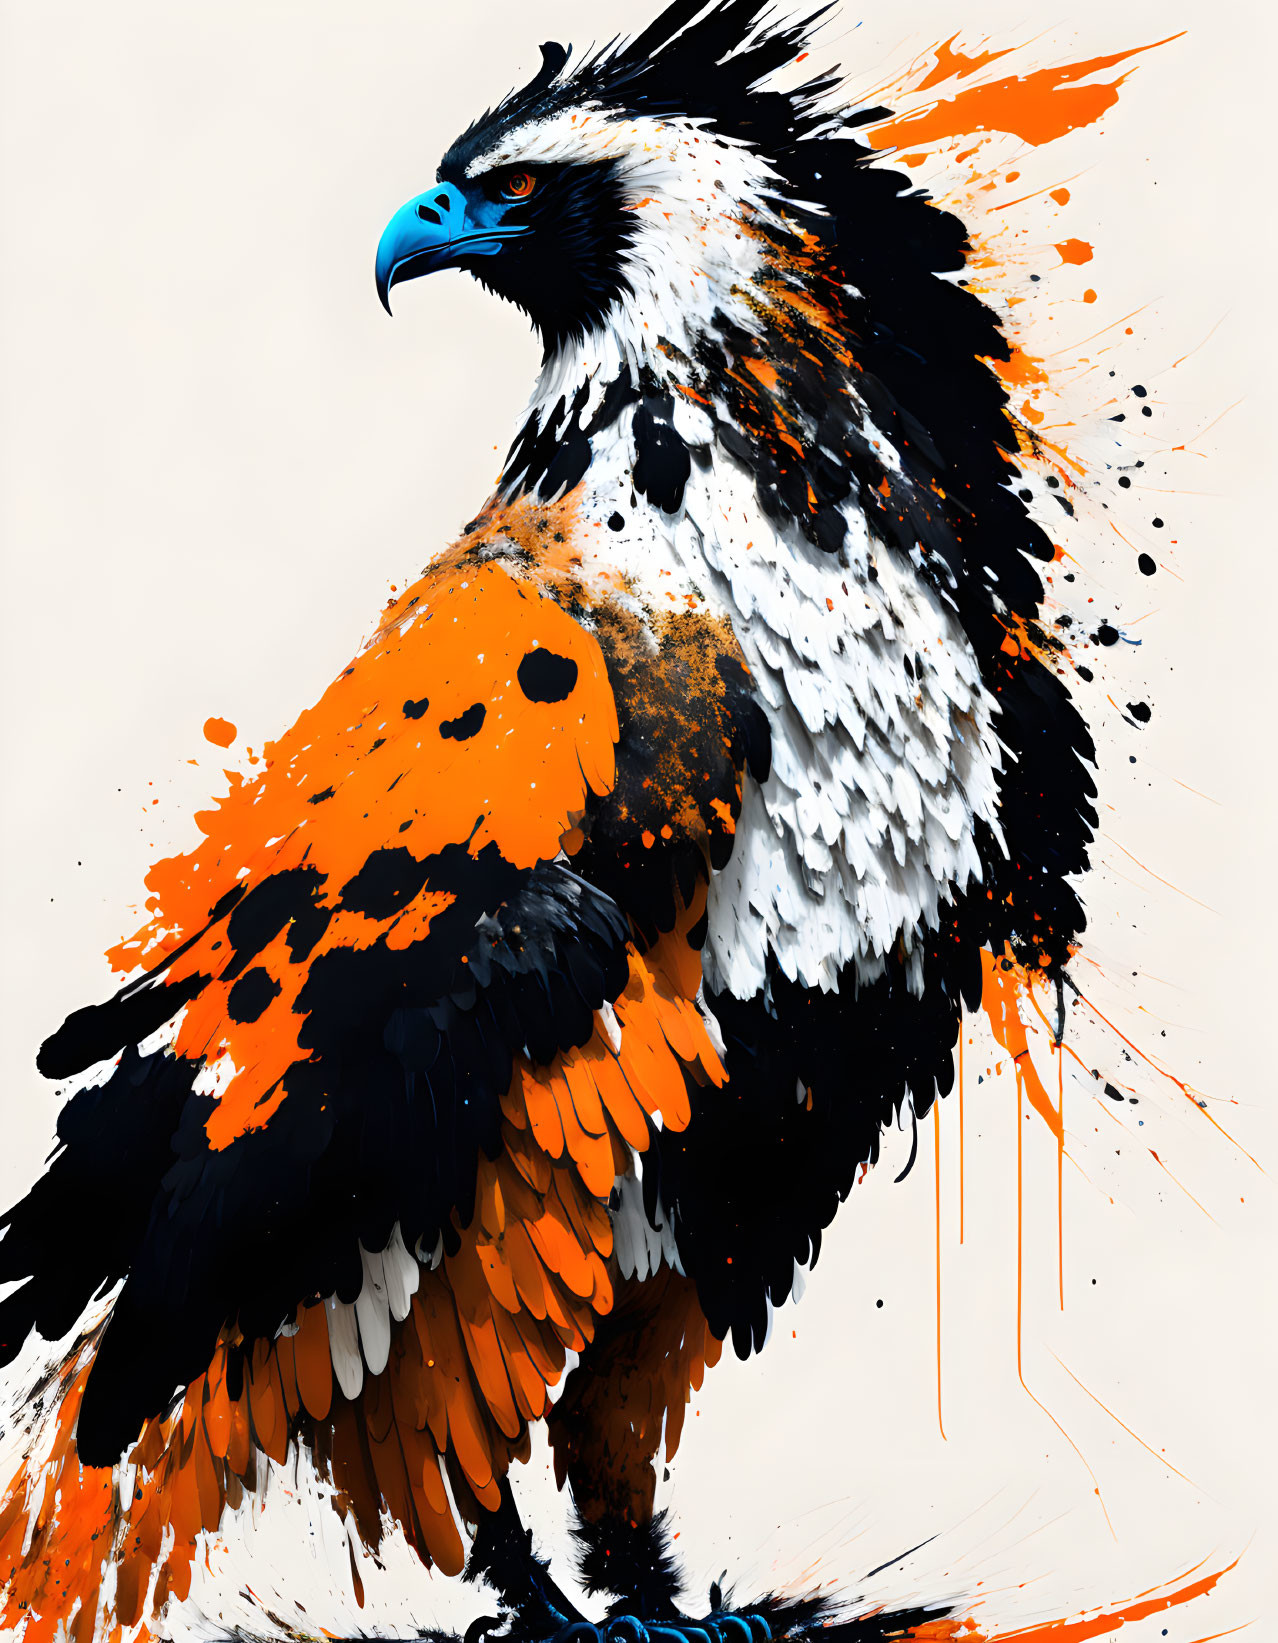 Vibrant digital artwork: Eagle with black, white, and orange plumage